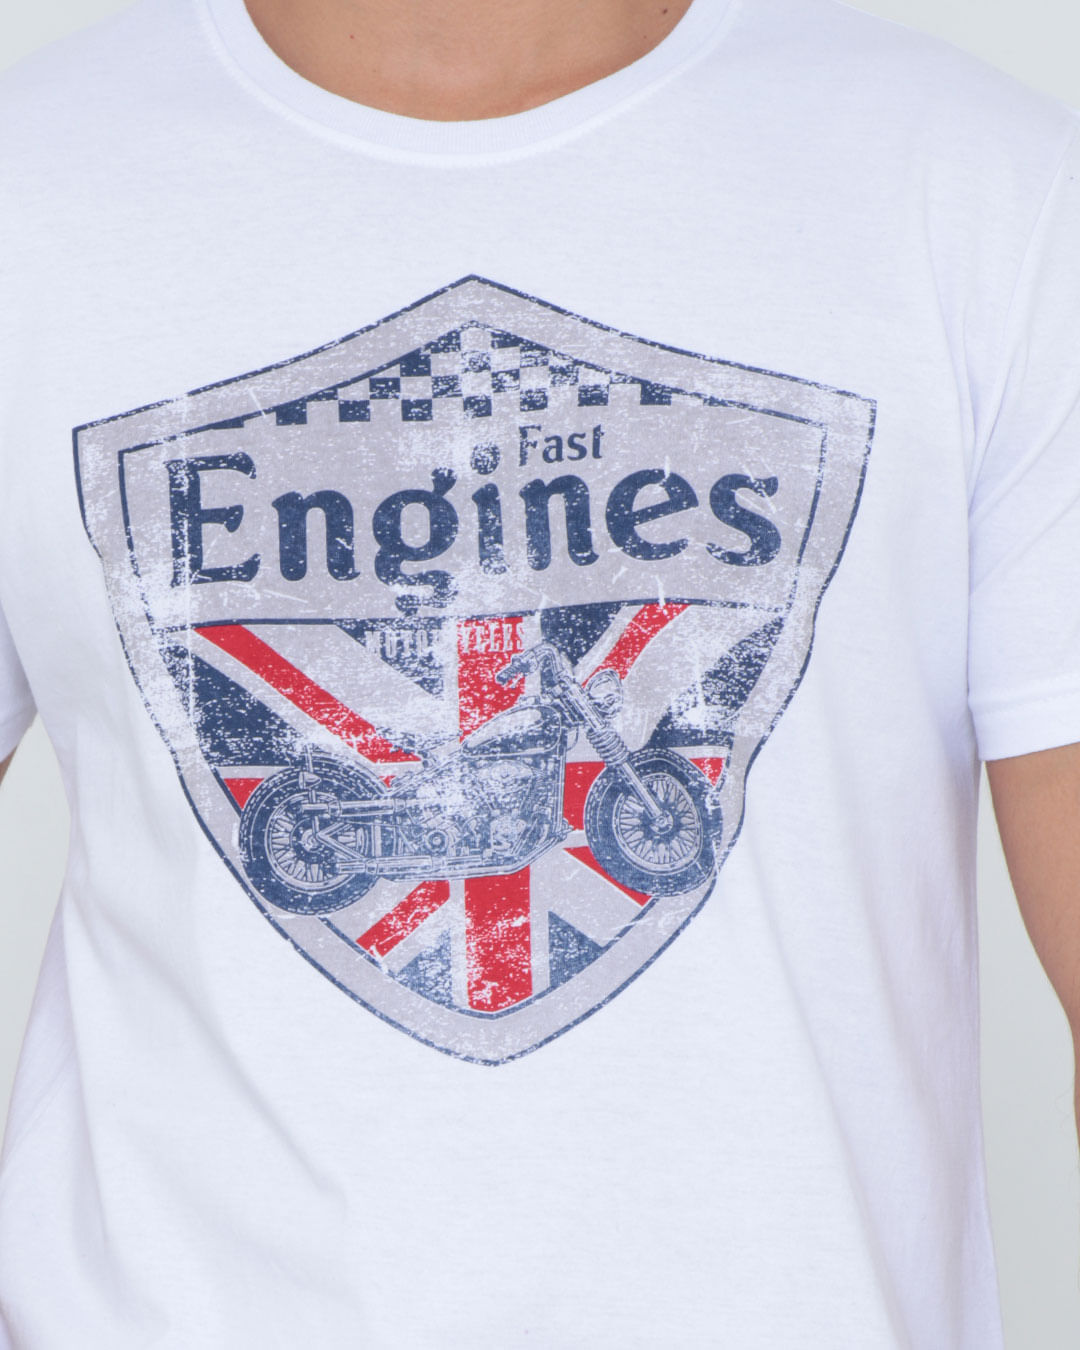 Camiseta-Ib10604-Engines-Branco-Pgg---Branco